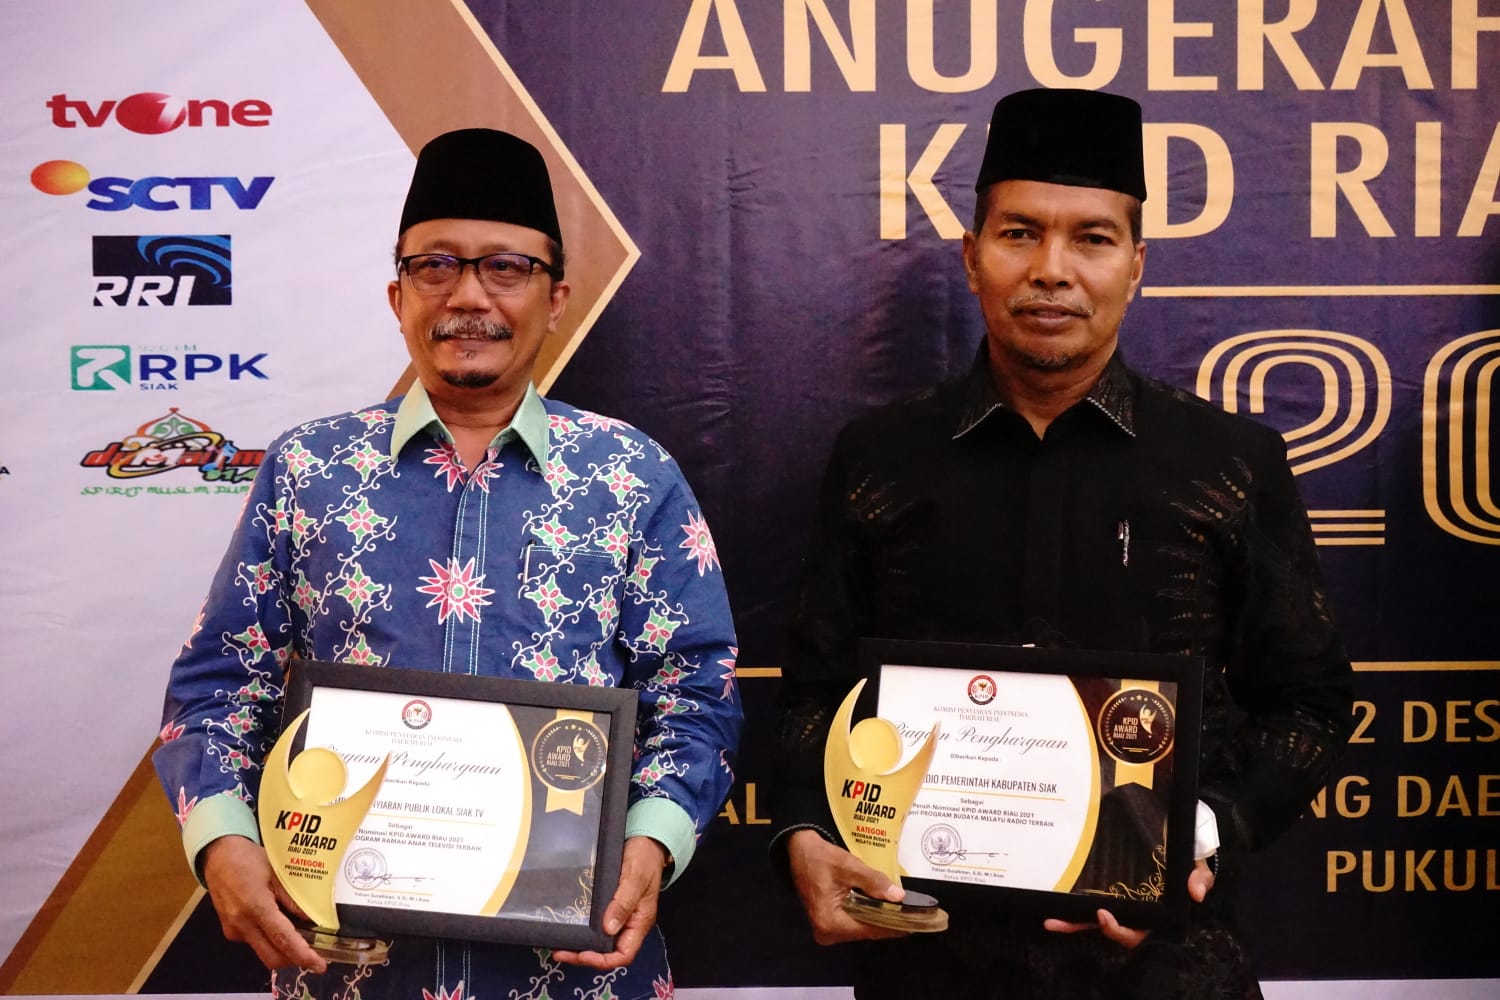 Anugerah KPID Riau Award 2021, LPP Lokal Siak TV dan RPK Raih Penghargaan